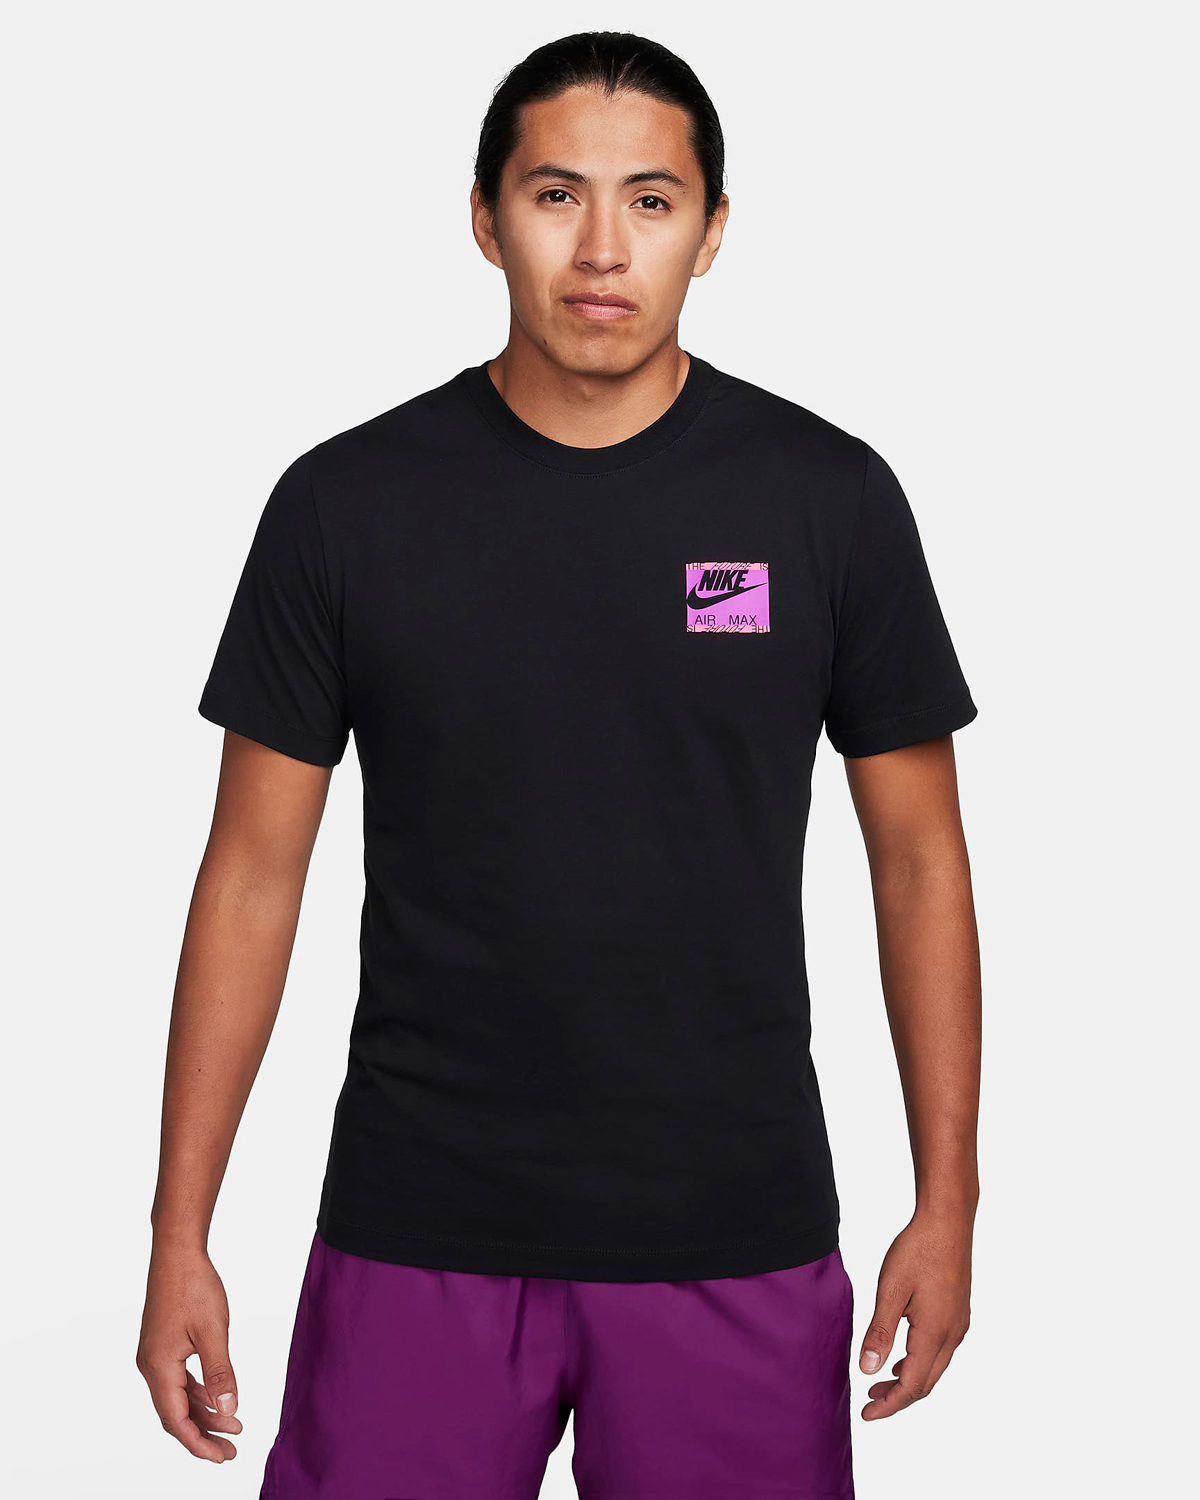 Nike-Sportswear-Air-Max-T-Shirt-Black-Purple-1